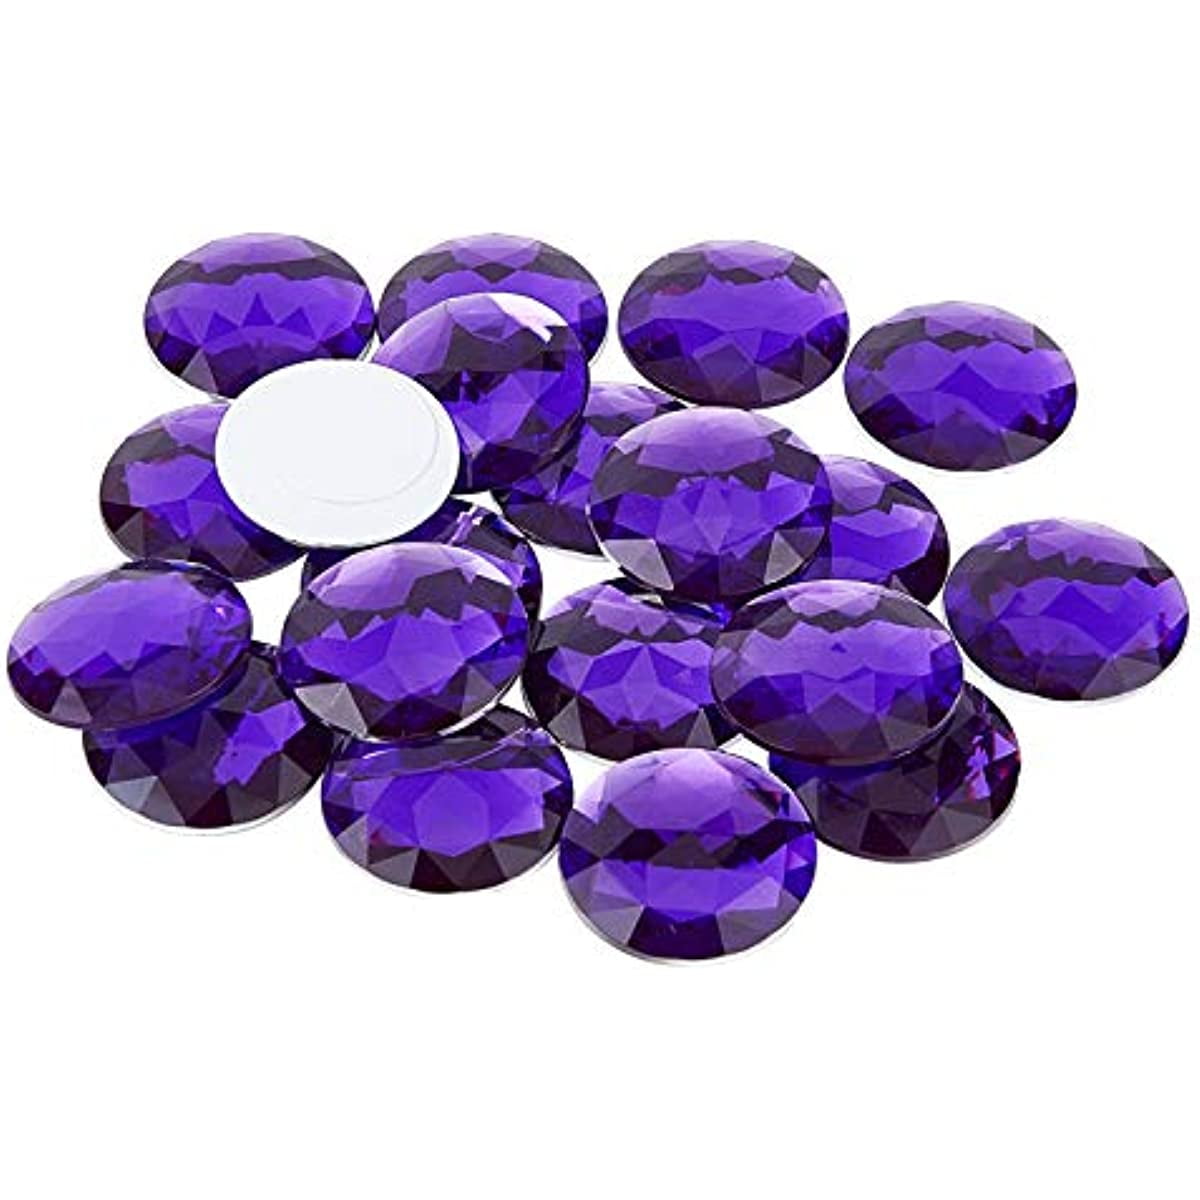 Allstarco 15mm Flat Back Heart Acrylic Rhinestones Plastic Gems Plastic  Costume Jewels Embelishments - 40 Pieces (Purple Amethyst .NAT02)